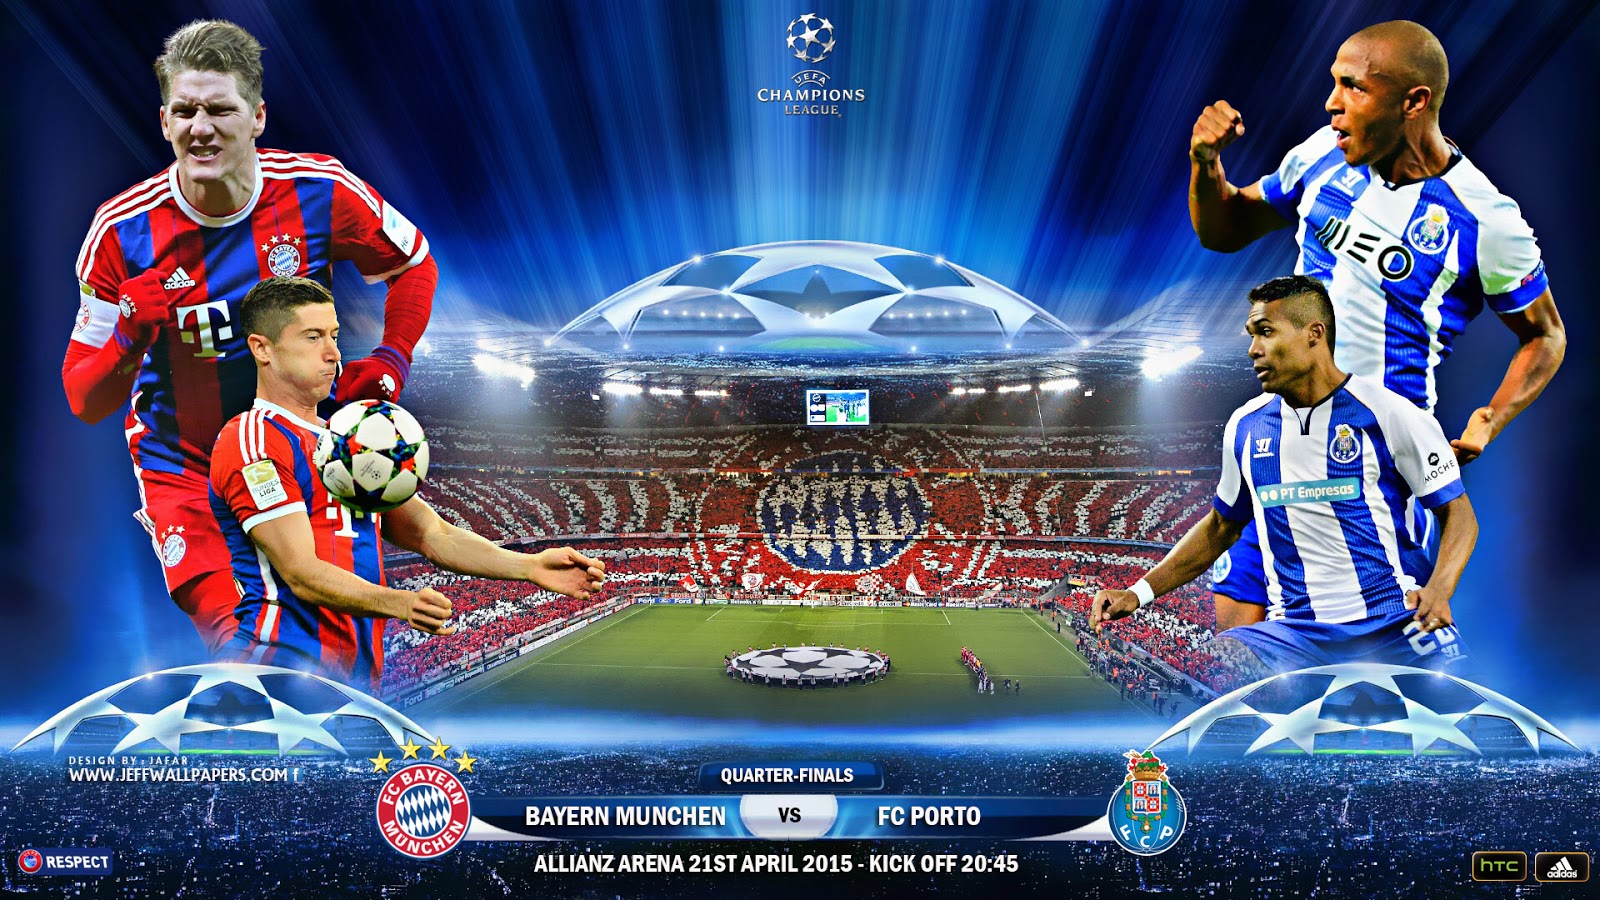 Atletico Madrid vs FC Bayern Munich Live Stream | FBStreams Link 2